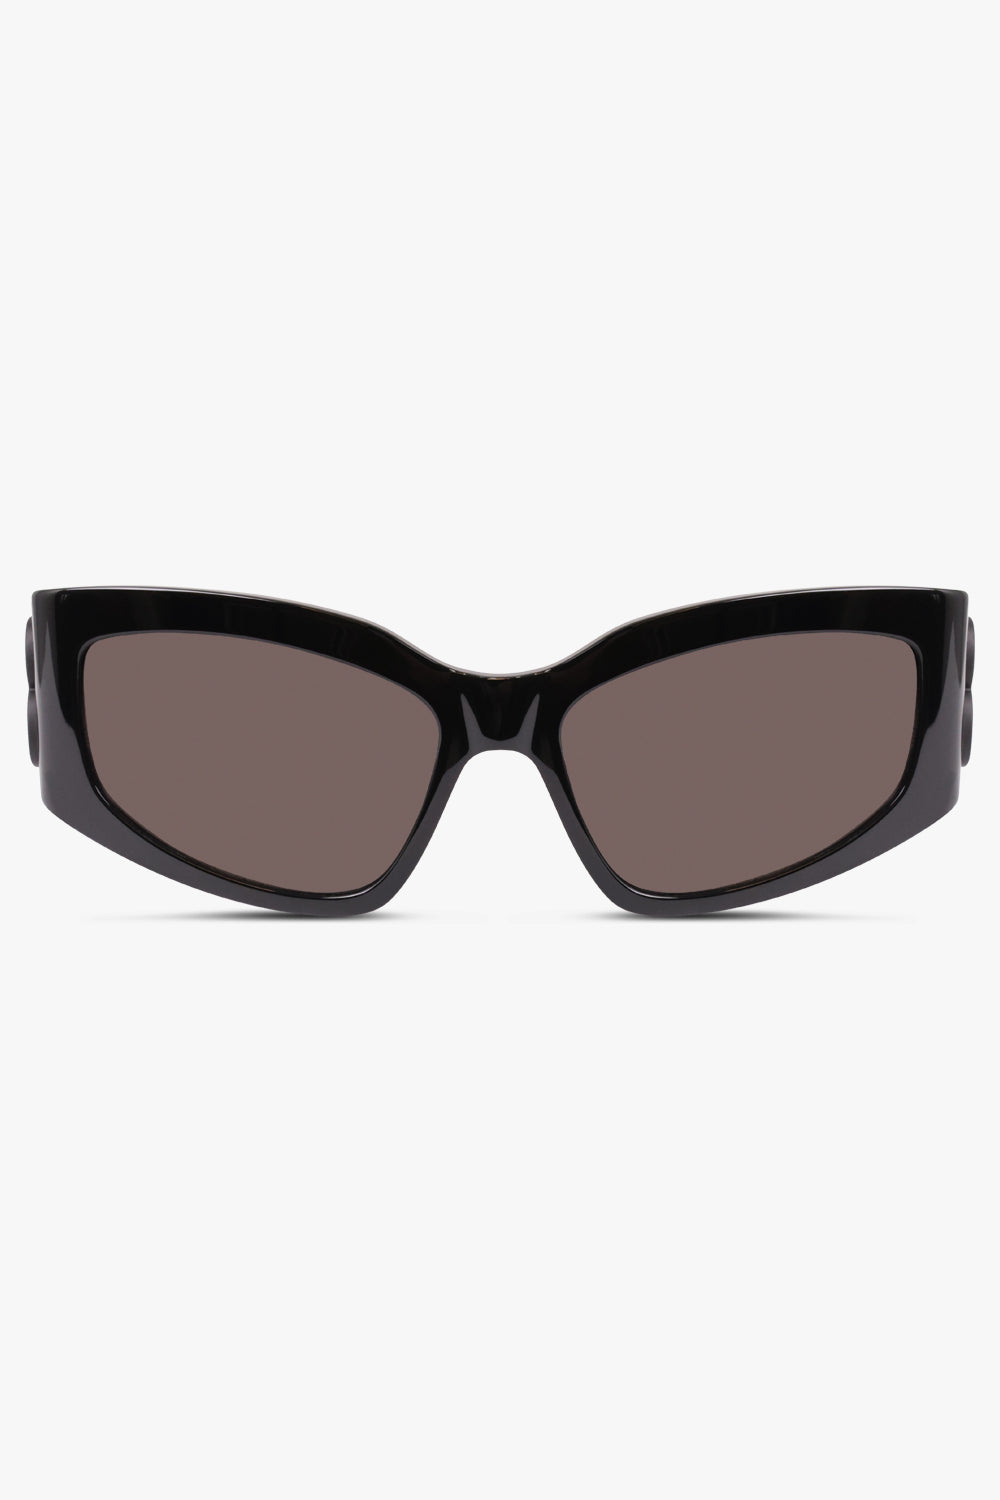 BALENCIAGA ACCESSORIES BLACK / BLACK BB031S 57 Cat Eye Sunglasses | Black